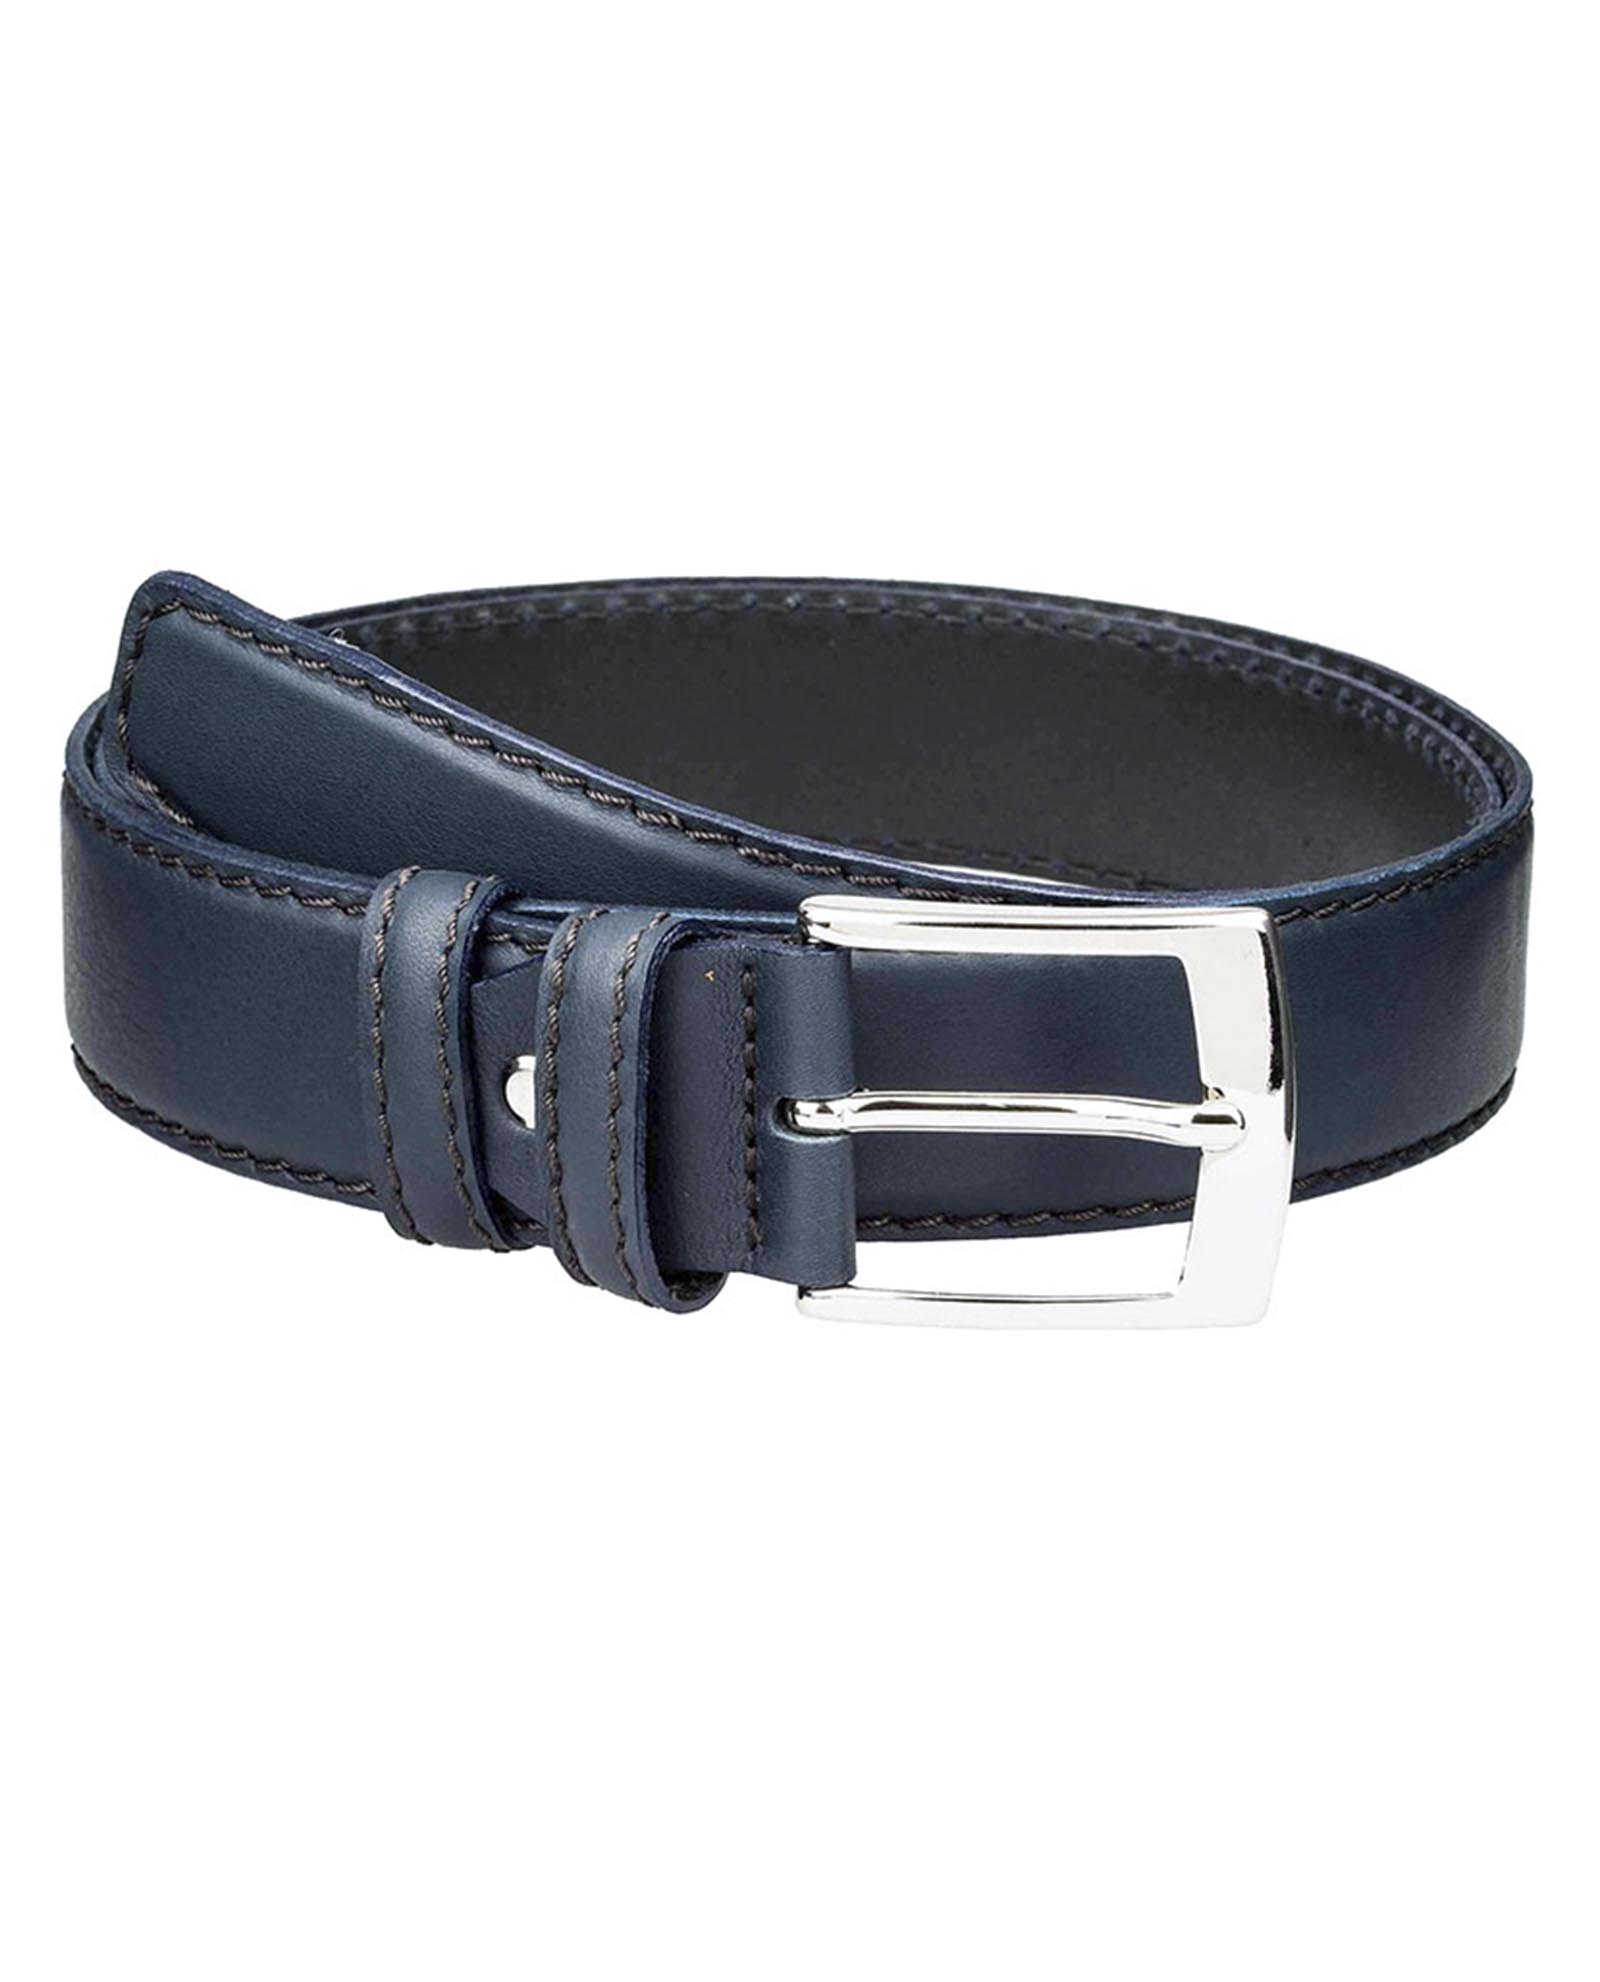 Buy Mens Blue Leather Belt | Italian Calfskin | LeatherBeltsOnline.com